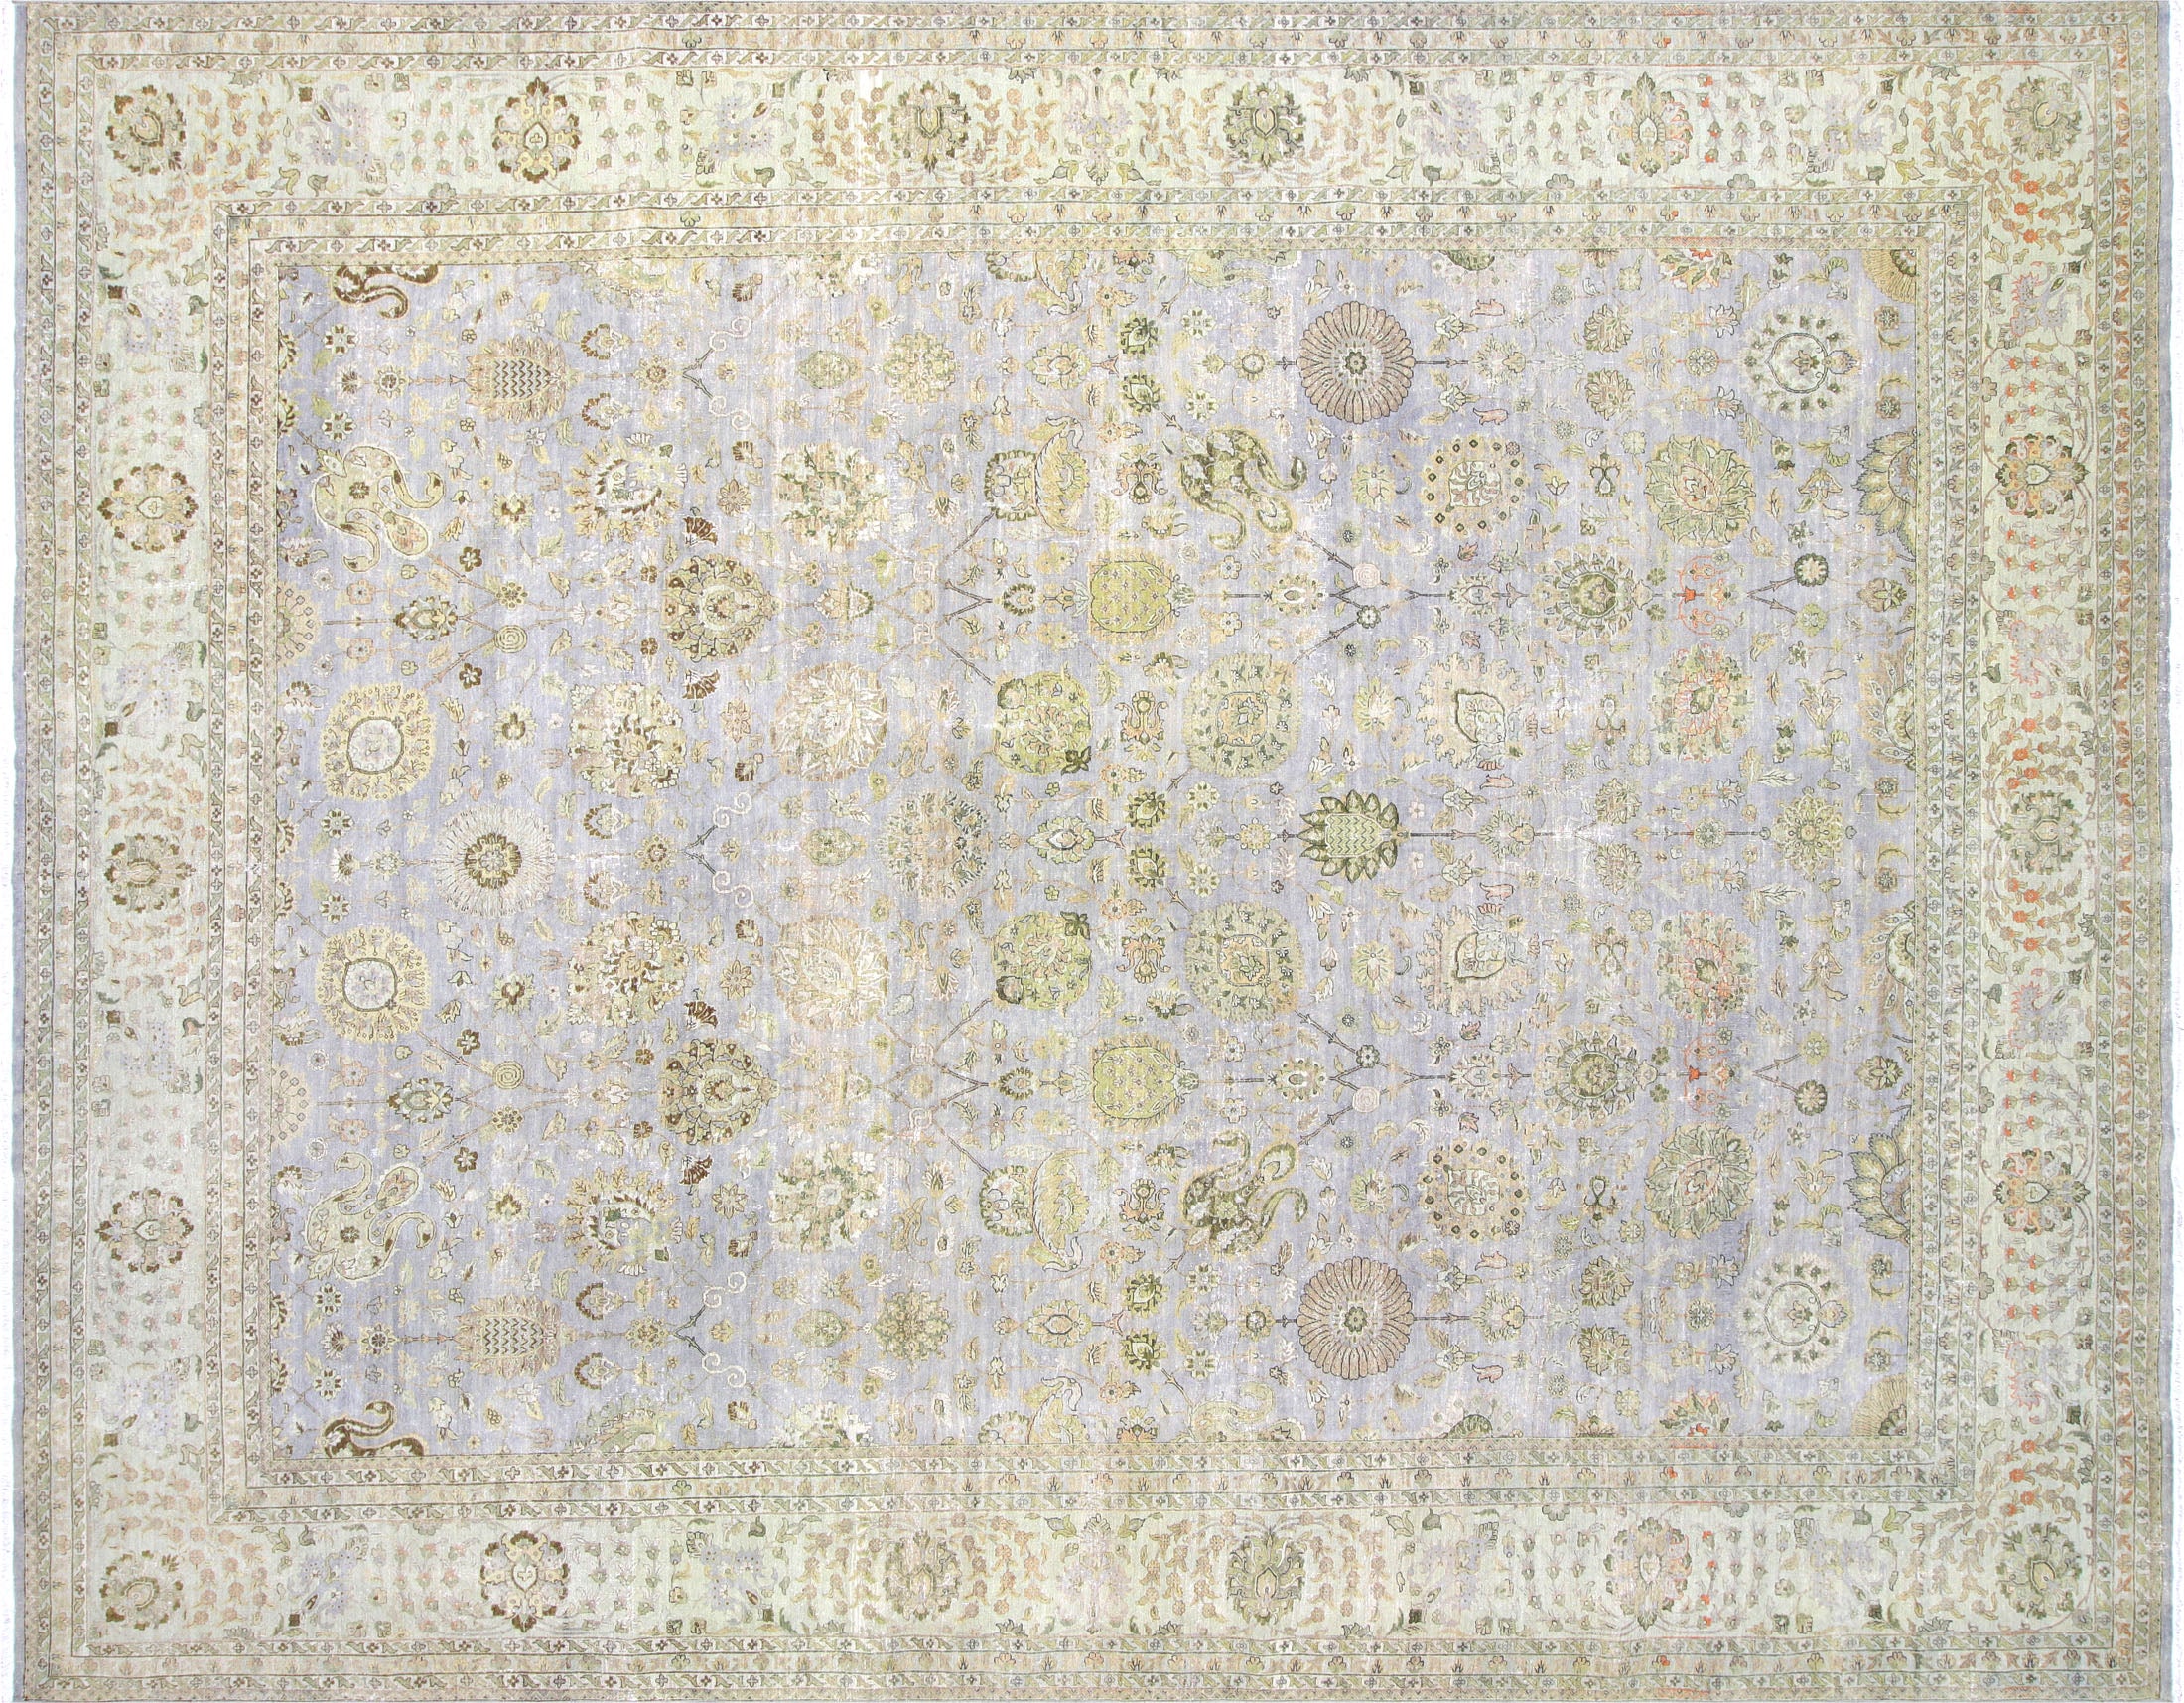 Vintage Persian Tabriz Carpet - 11'7" x 14'10"